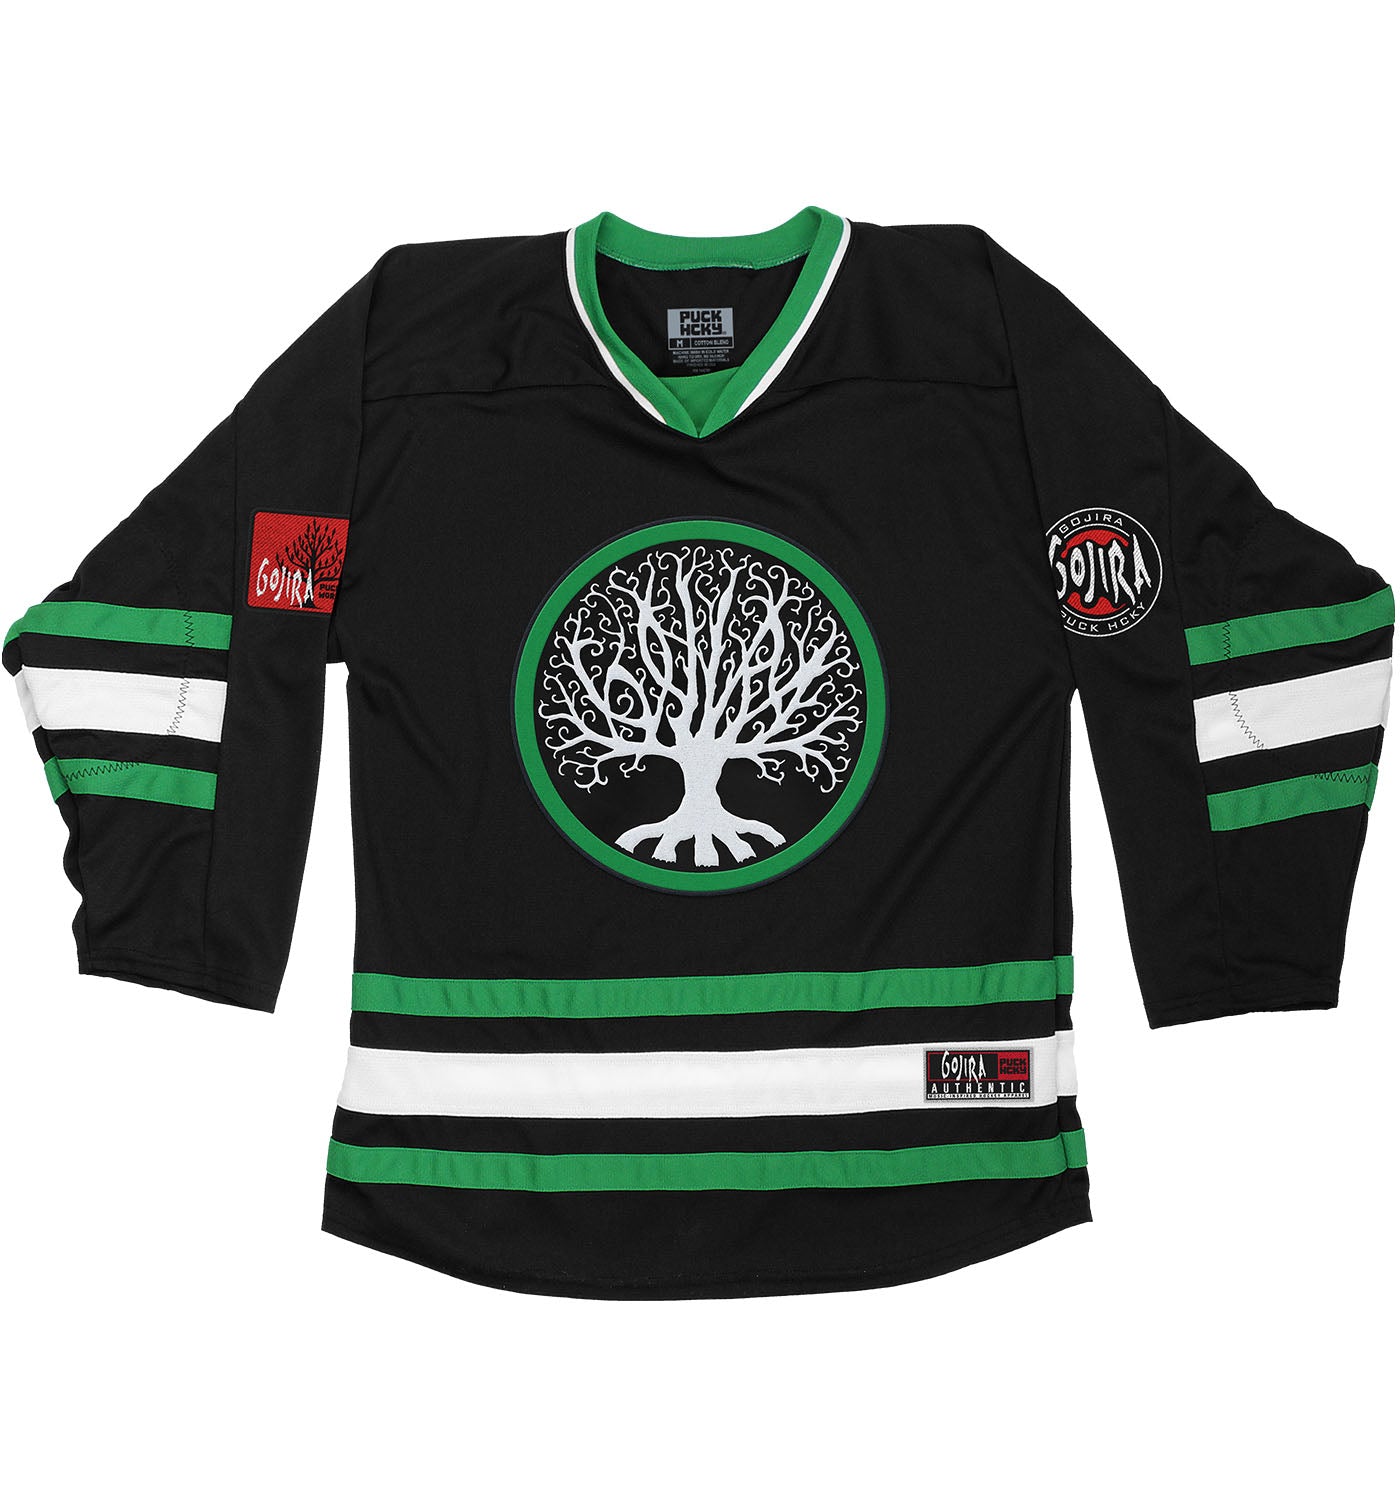 Latest Design 5XL Plus Size Custom Embroidery Hockey Hoodie